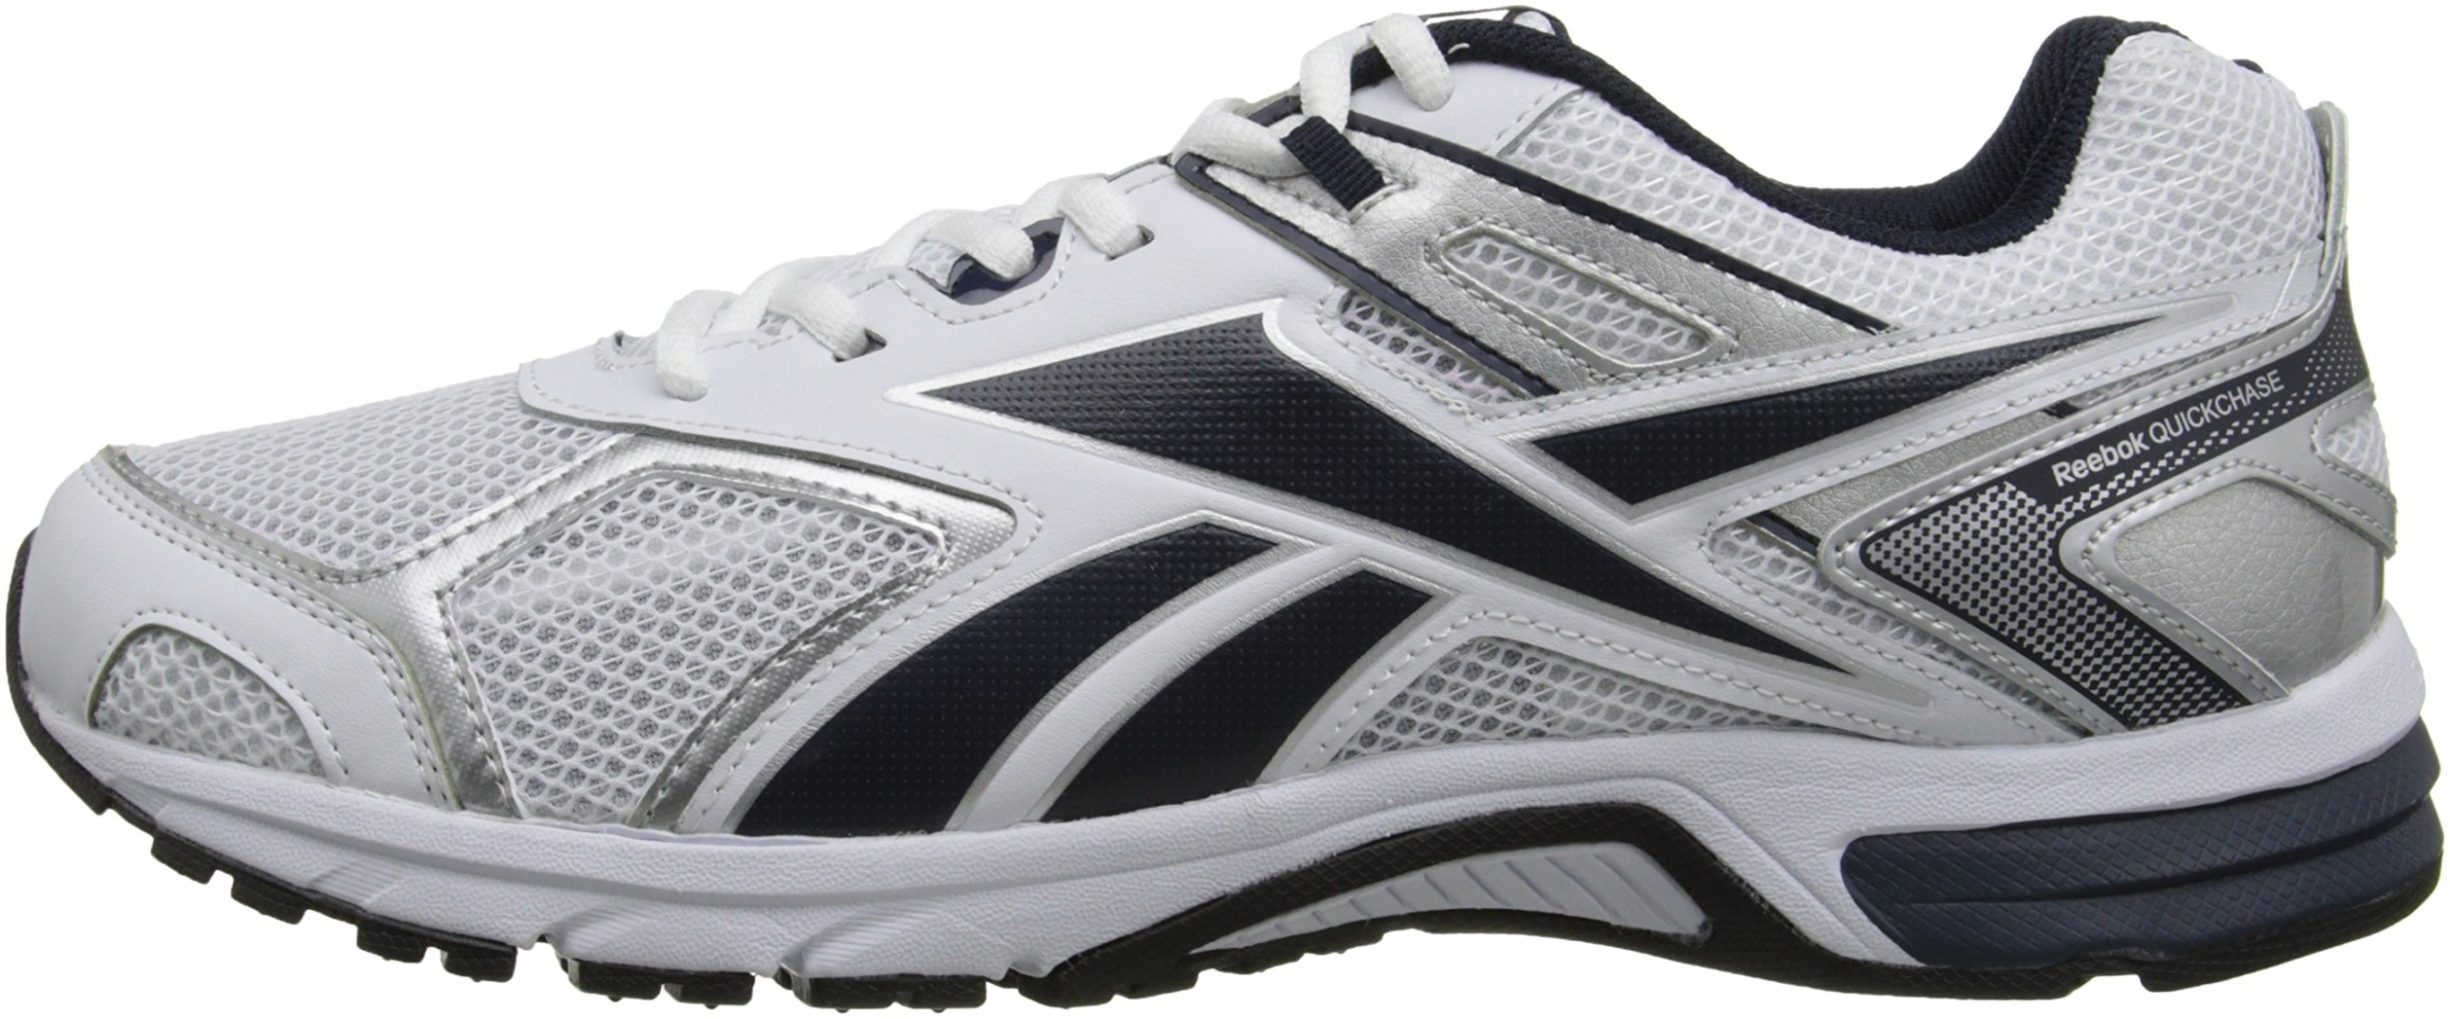 reebok men's quick running shoes